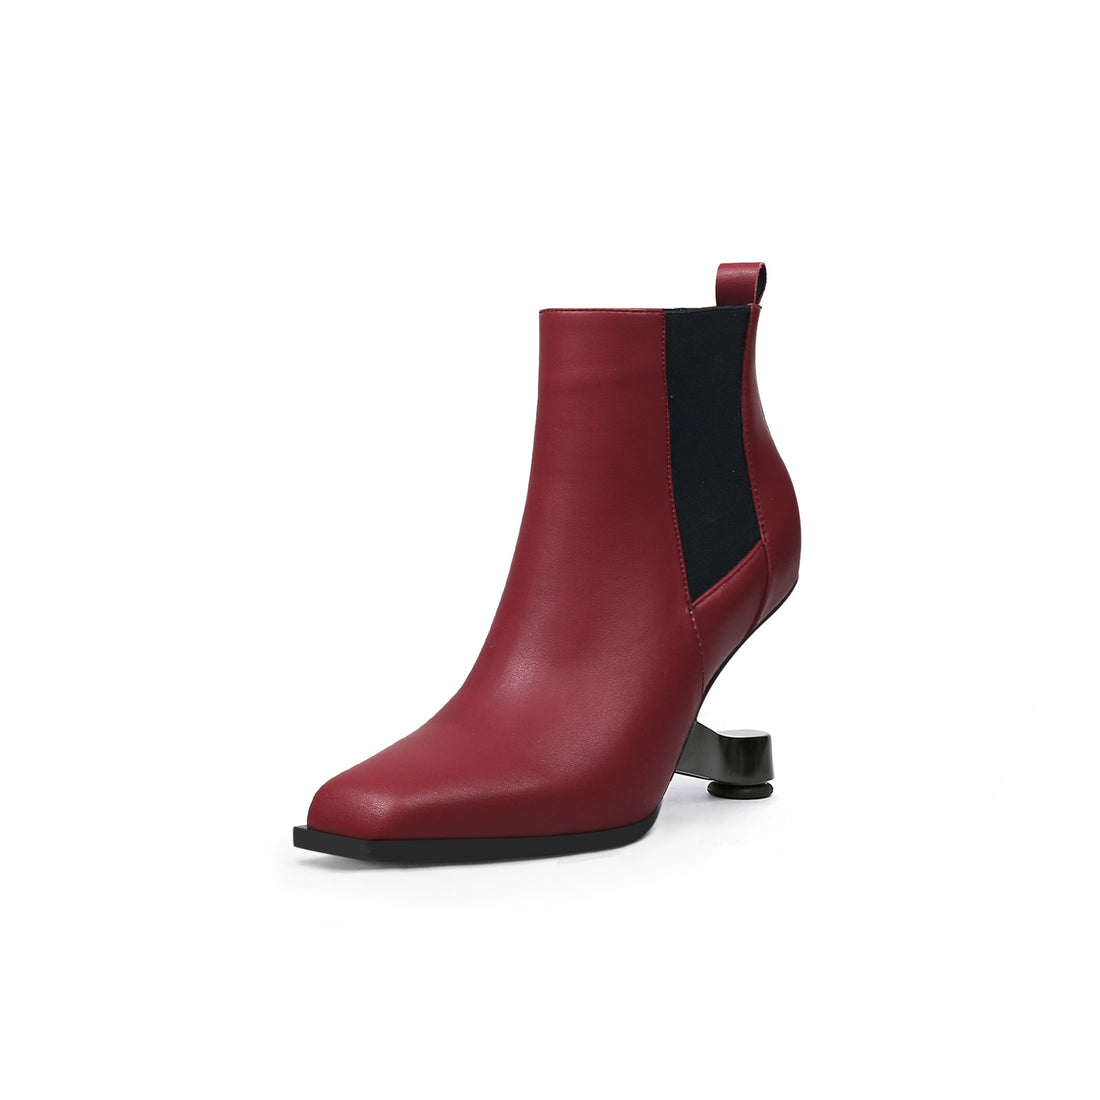 Madamoiselle Futuristic Pointed-Toe Wine Boots